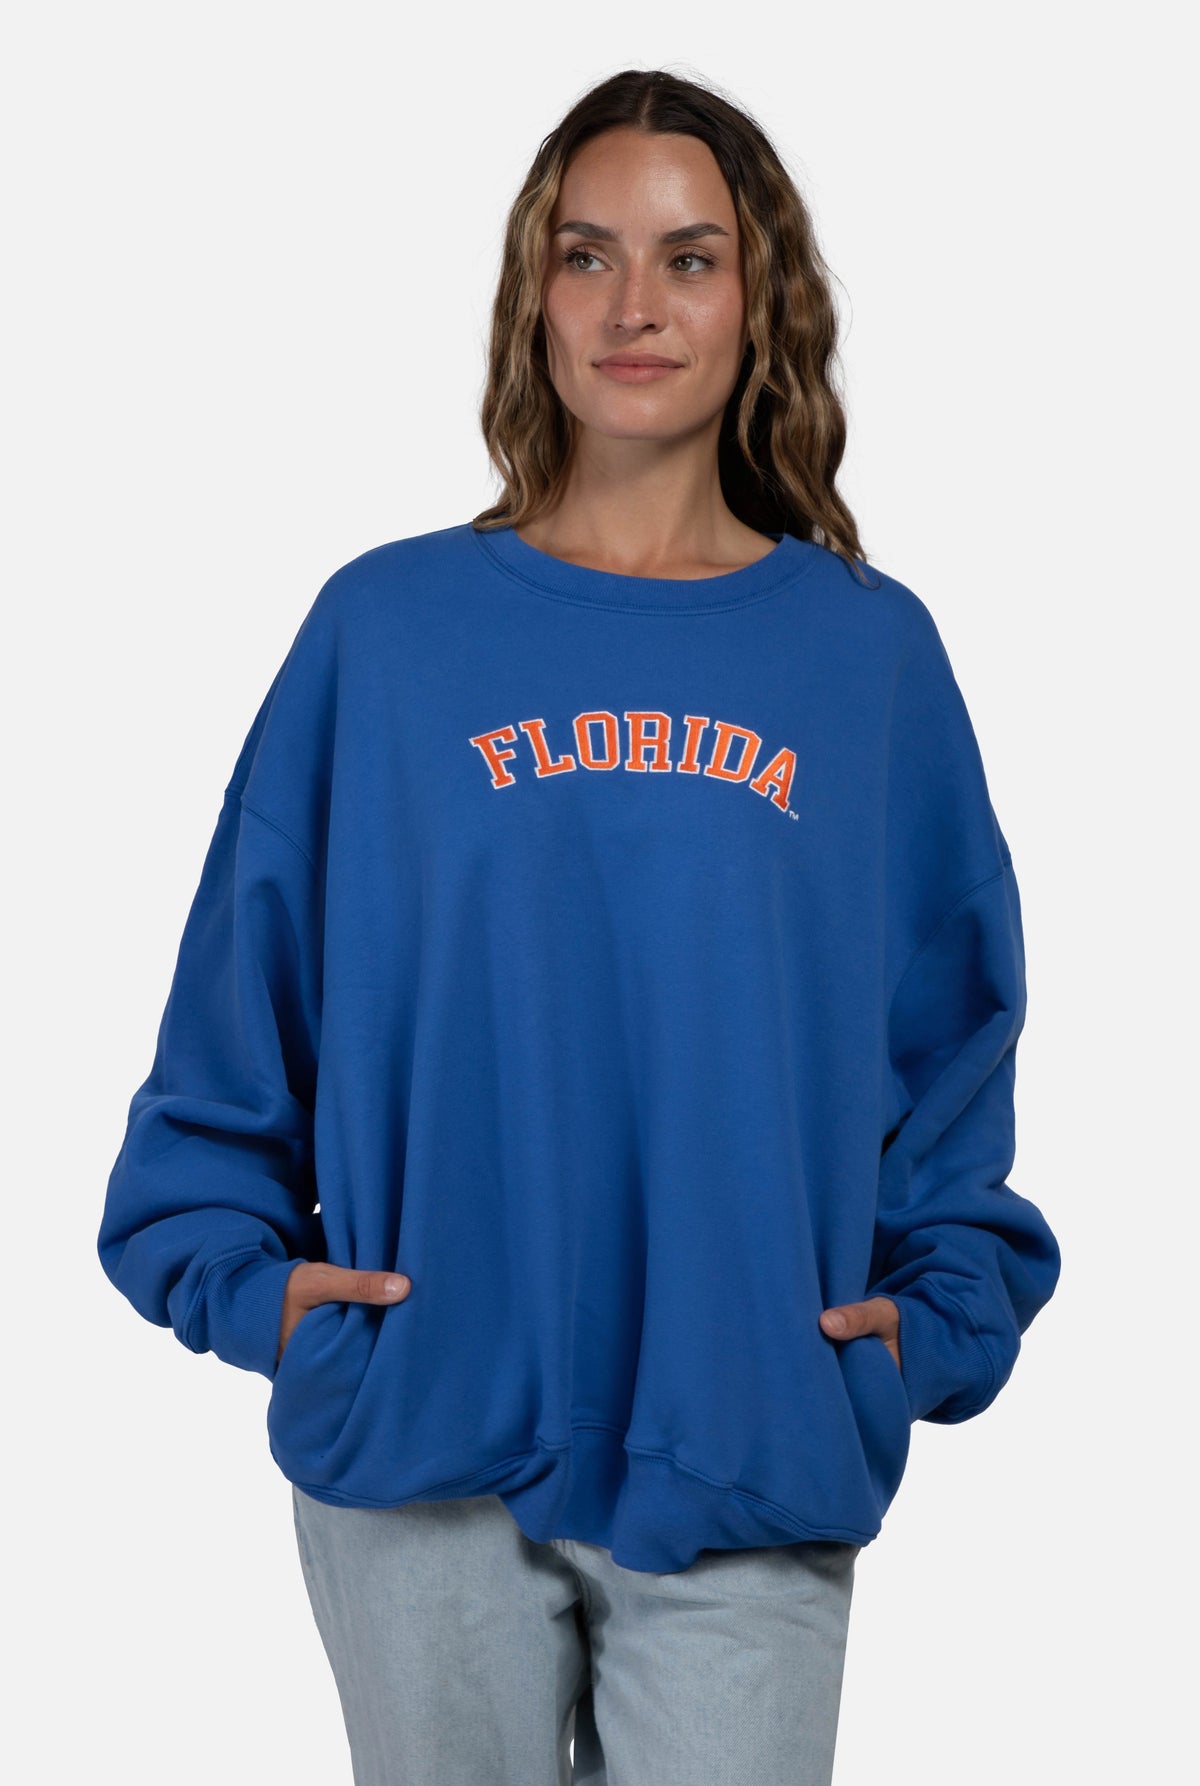 University of Florida G.O.A.T. Sweater